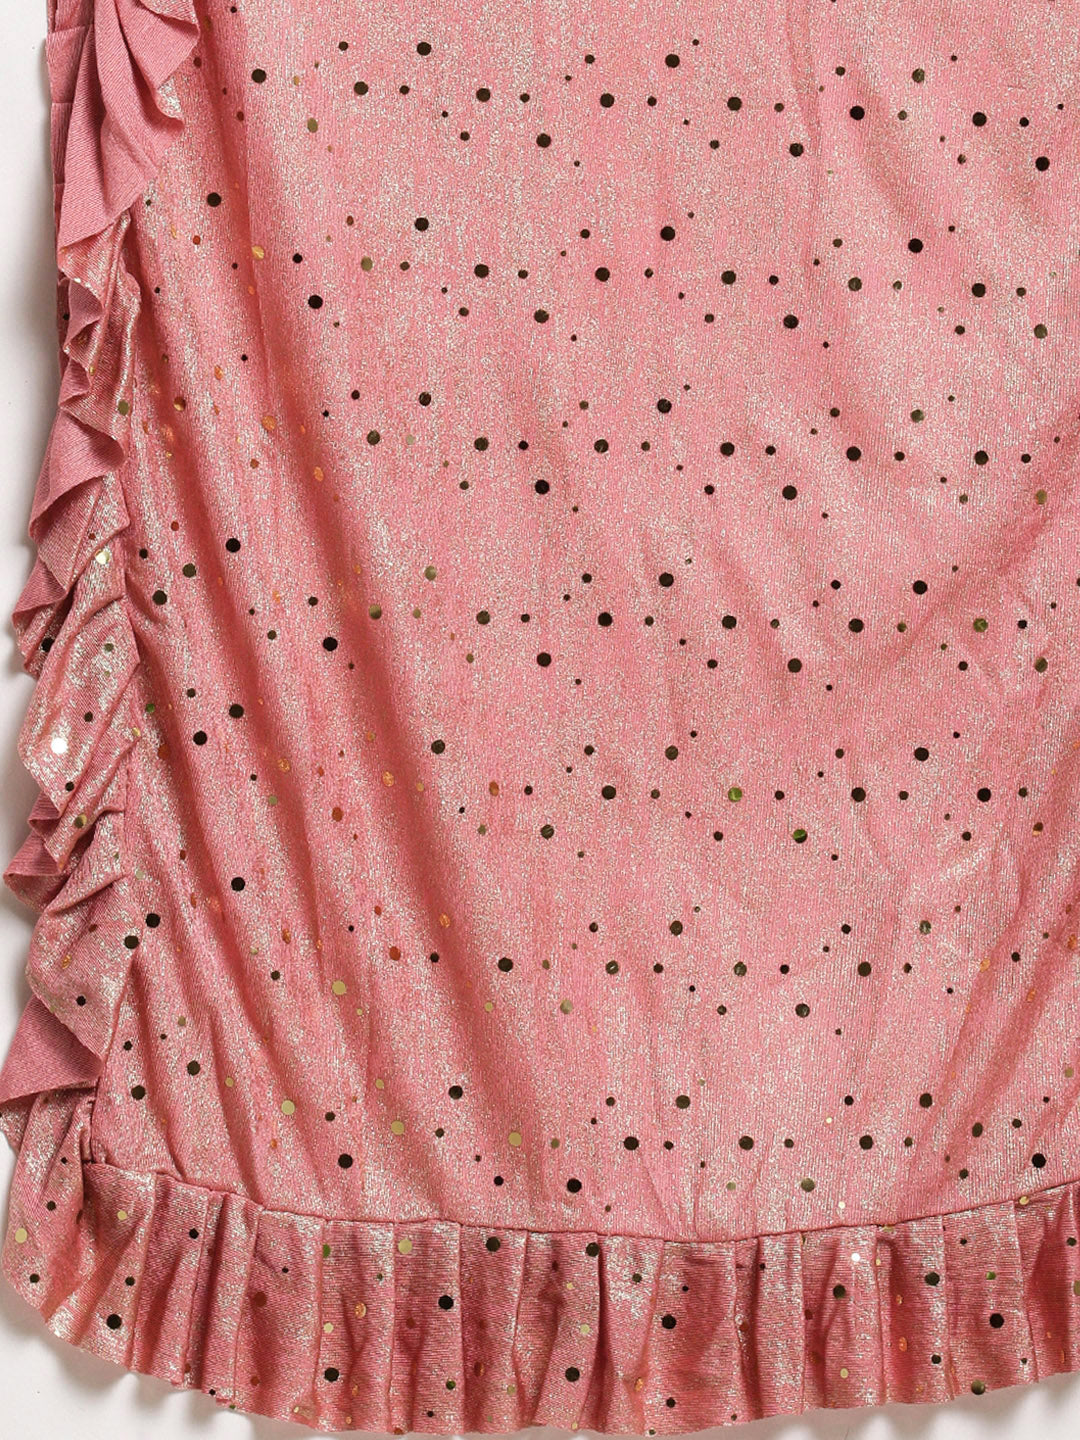 Neeru's Peach Color Lycra Fabric Drape Saree